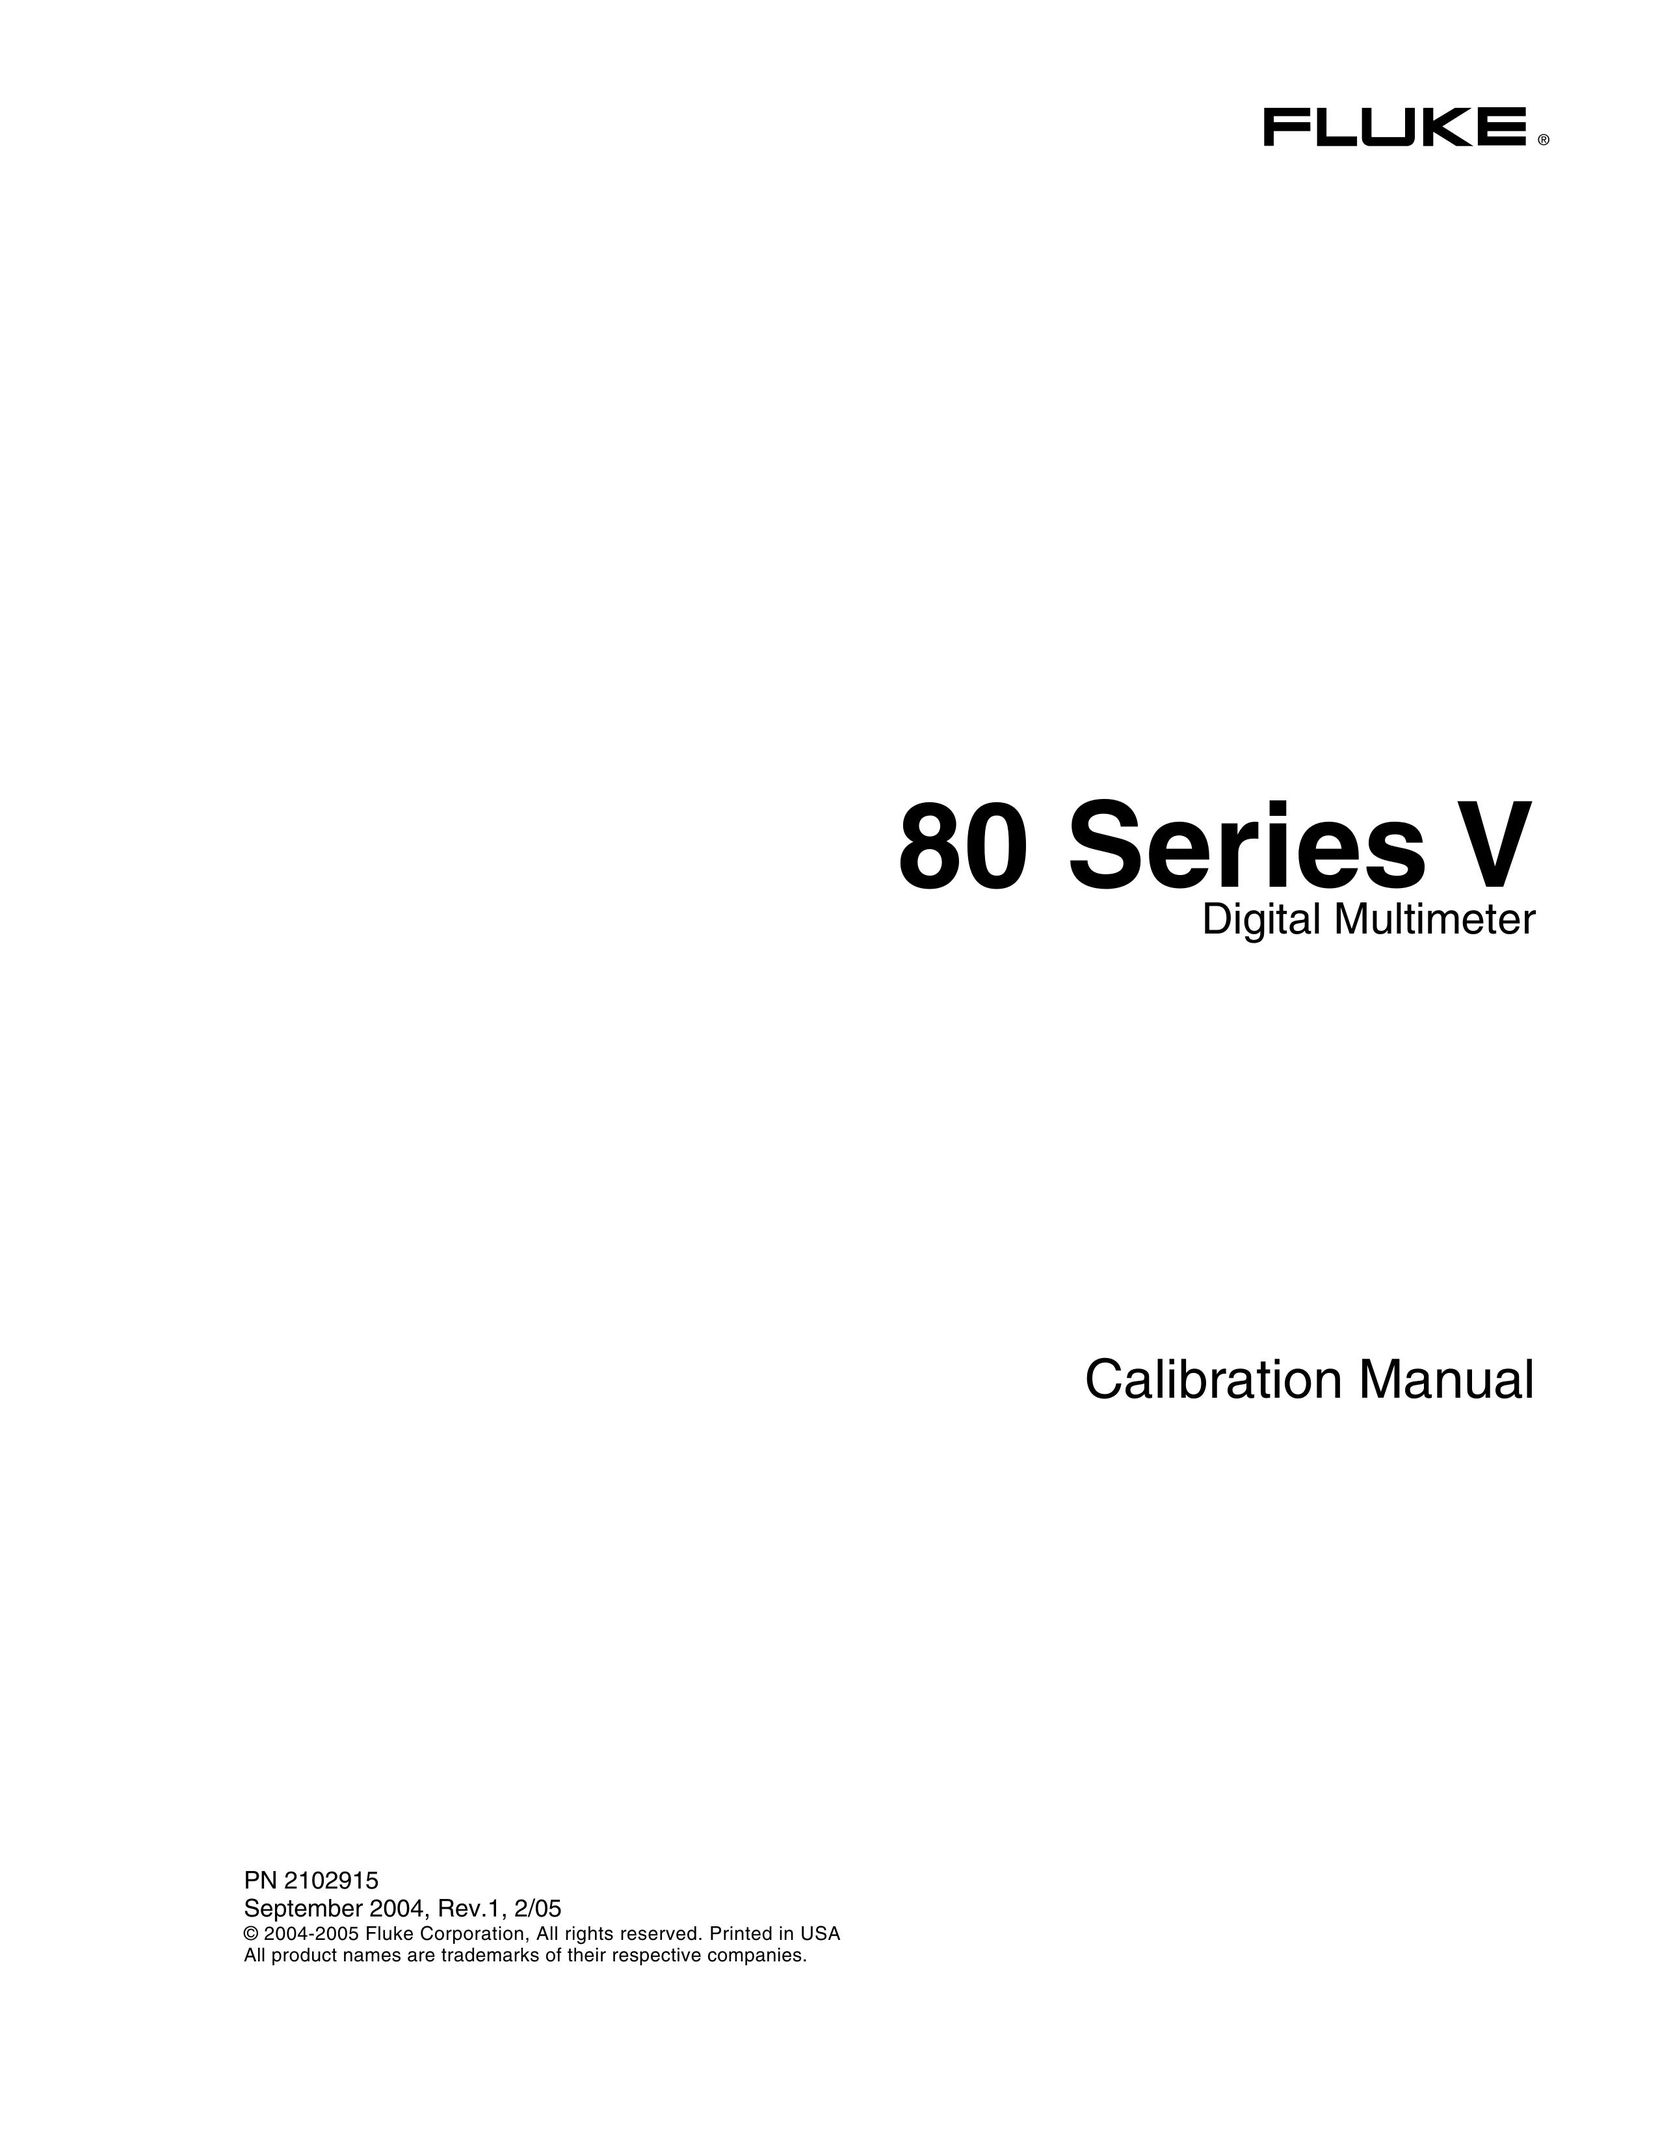 Fluke 80 Series V Universal Remote User Manual